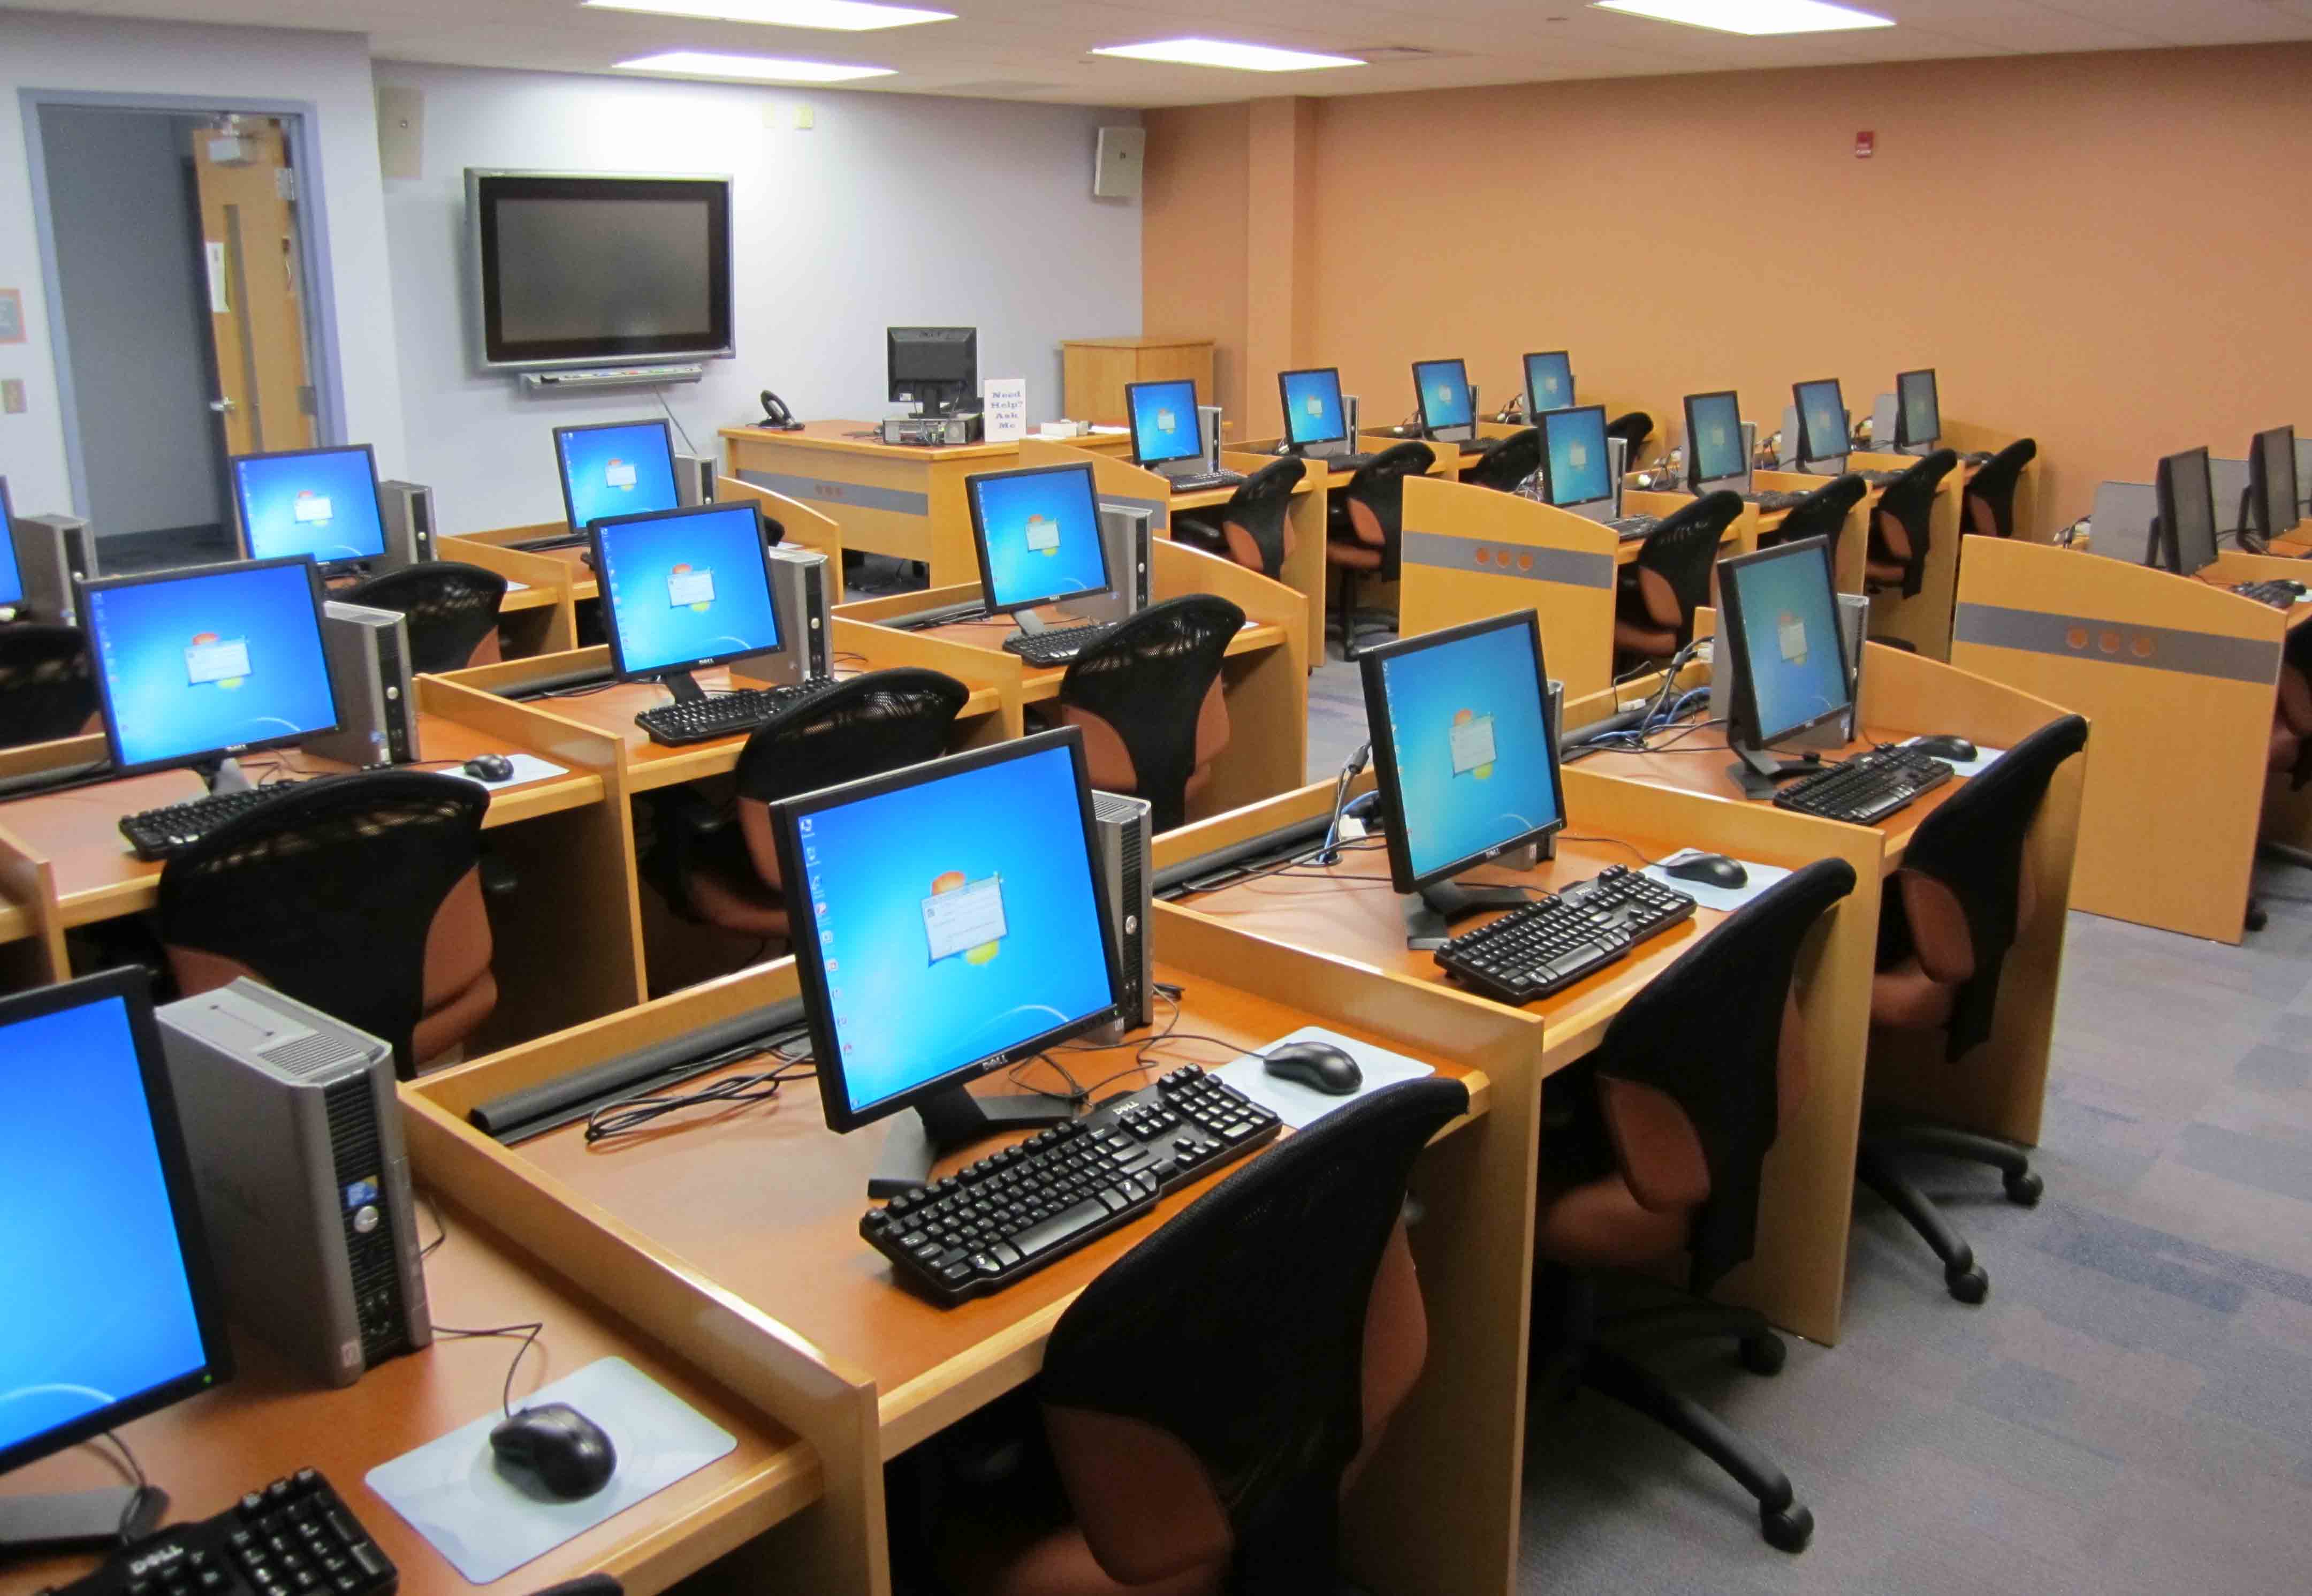 Computer lab - Taj Global Academy, Dhanani - An English Medium  Co-Educational School